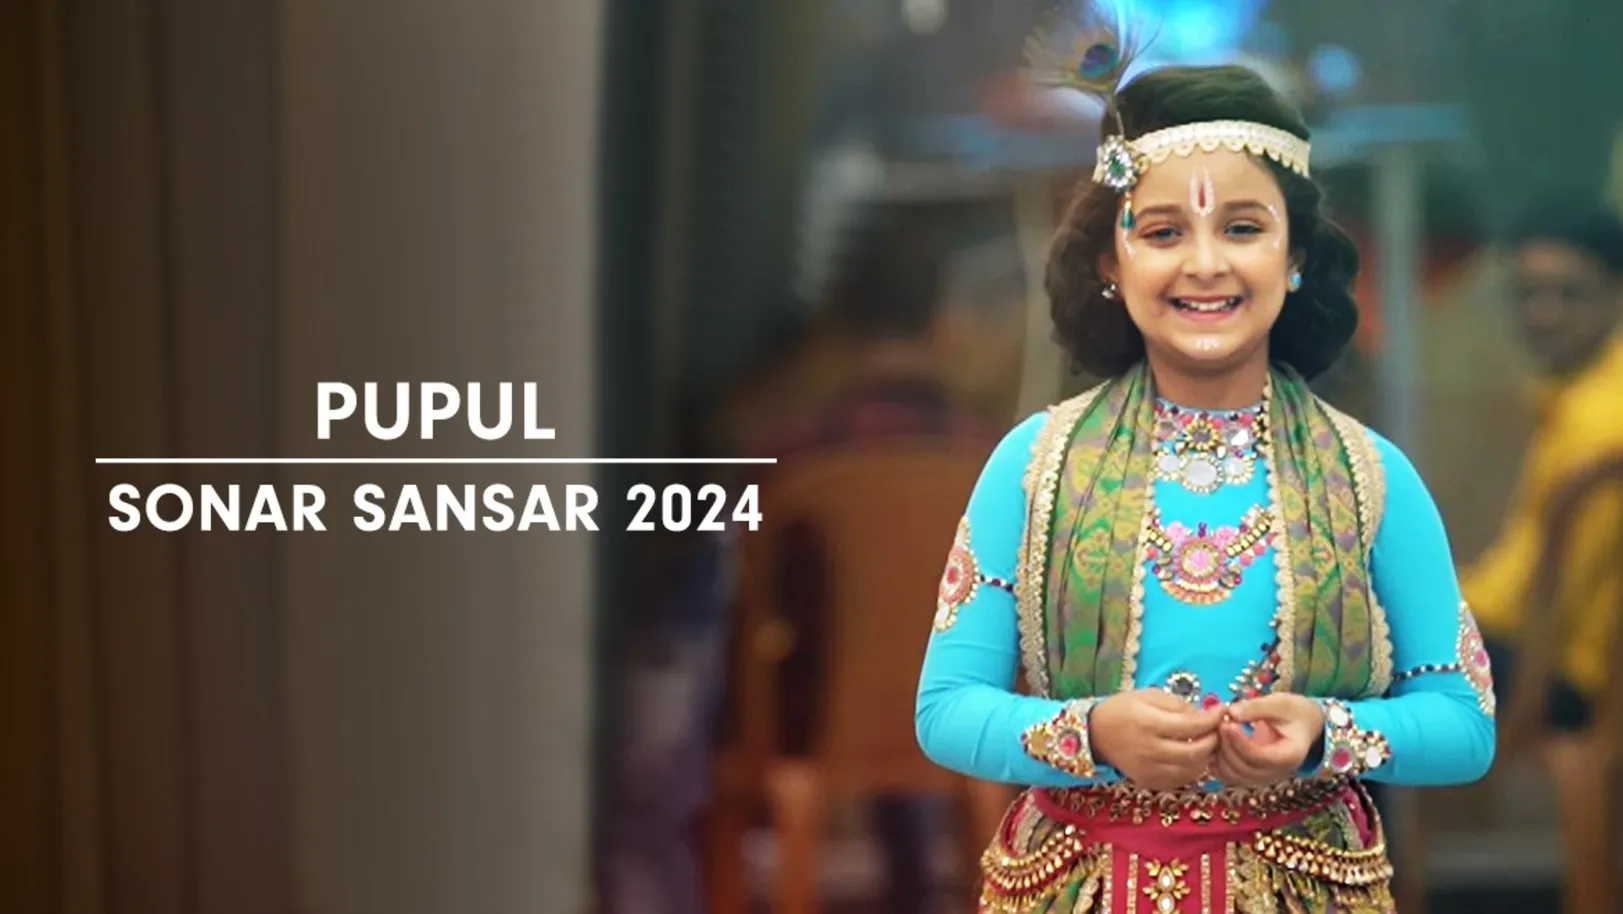 Preparations for the Sonar Sansar Awards | Sonar Sansar Awards 2024 